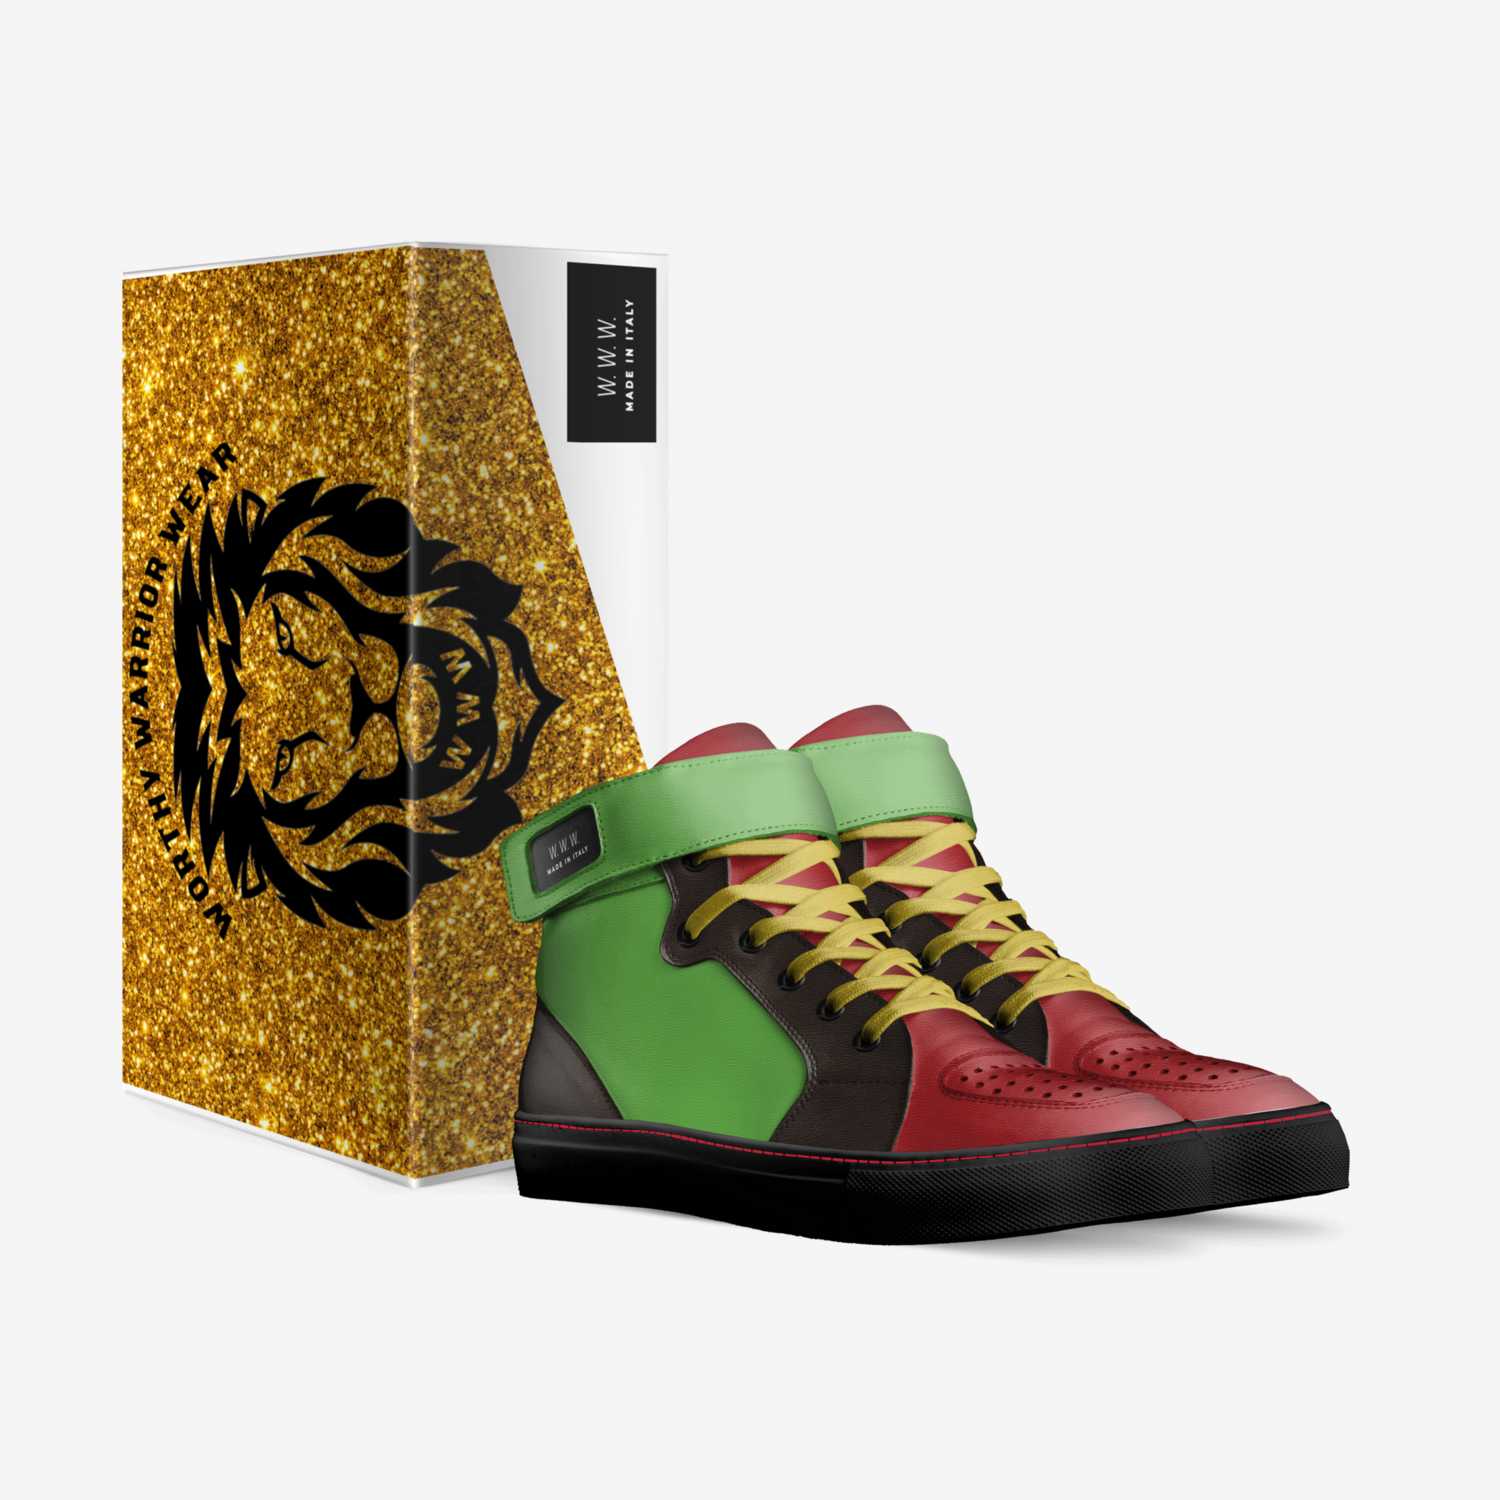 Zulu Warrior Wear custom made in Italy shoes by John H. Harris, Jr. | Box view